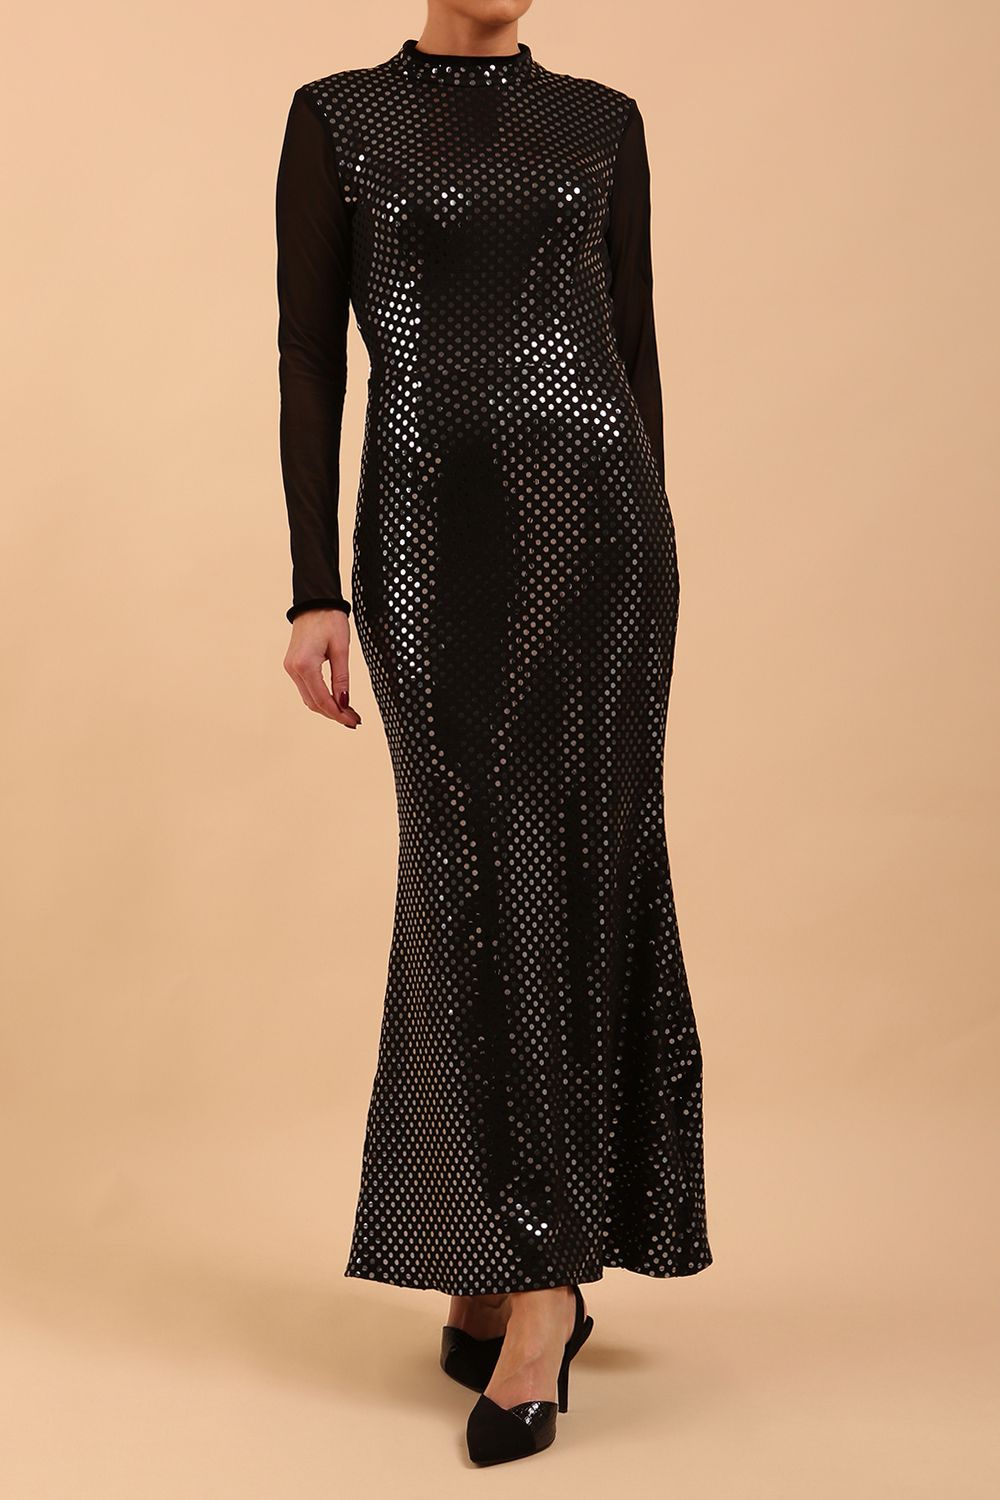 Blonde Model wearing a long full length metallic sparkle dress by Diva Catwalk front